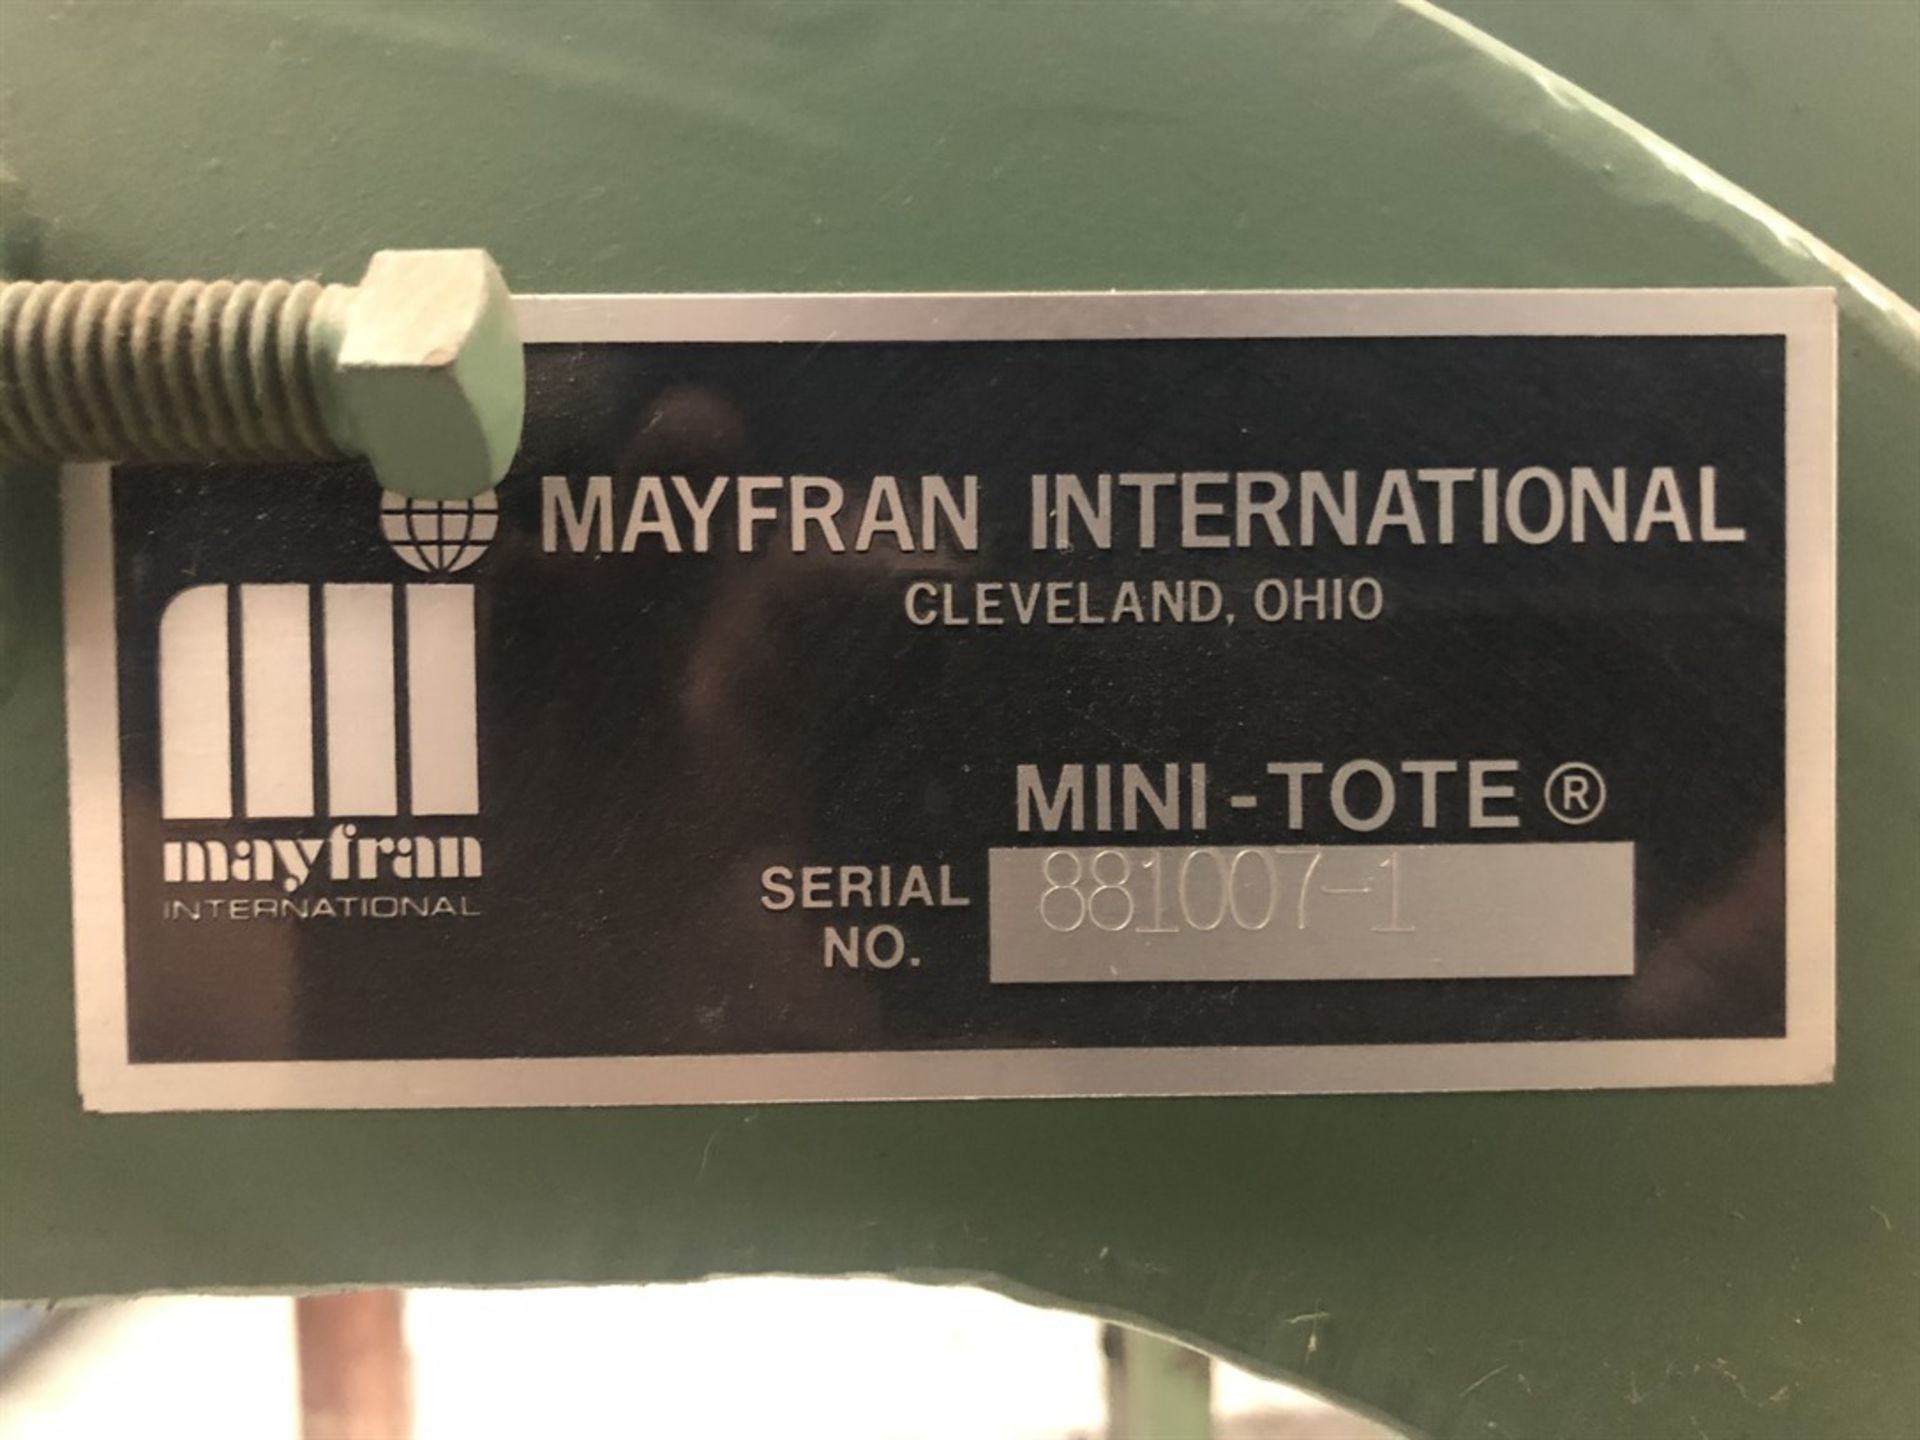 MAYFRAN Mini-Tote Chip Conveyor, s/n 881007-1 - Image 3 of 3